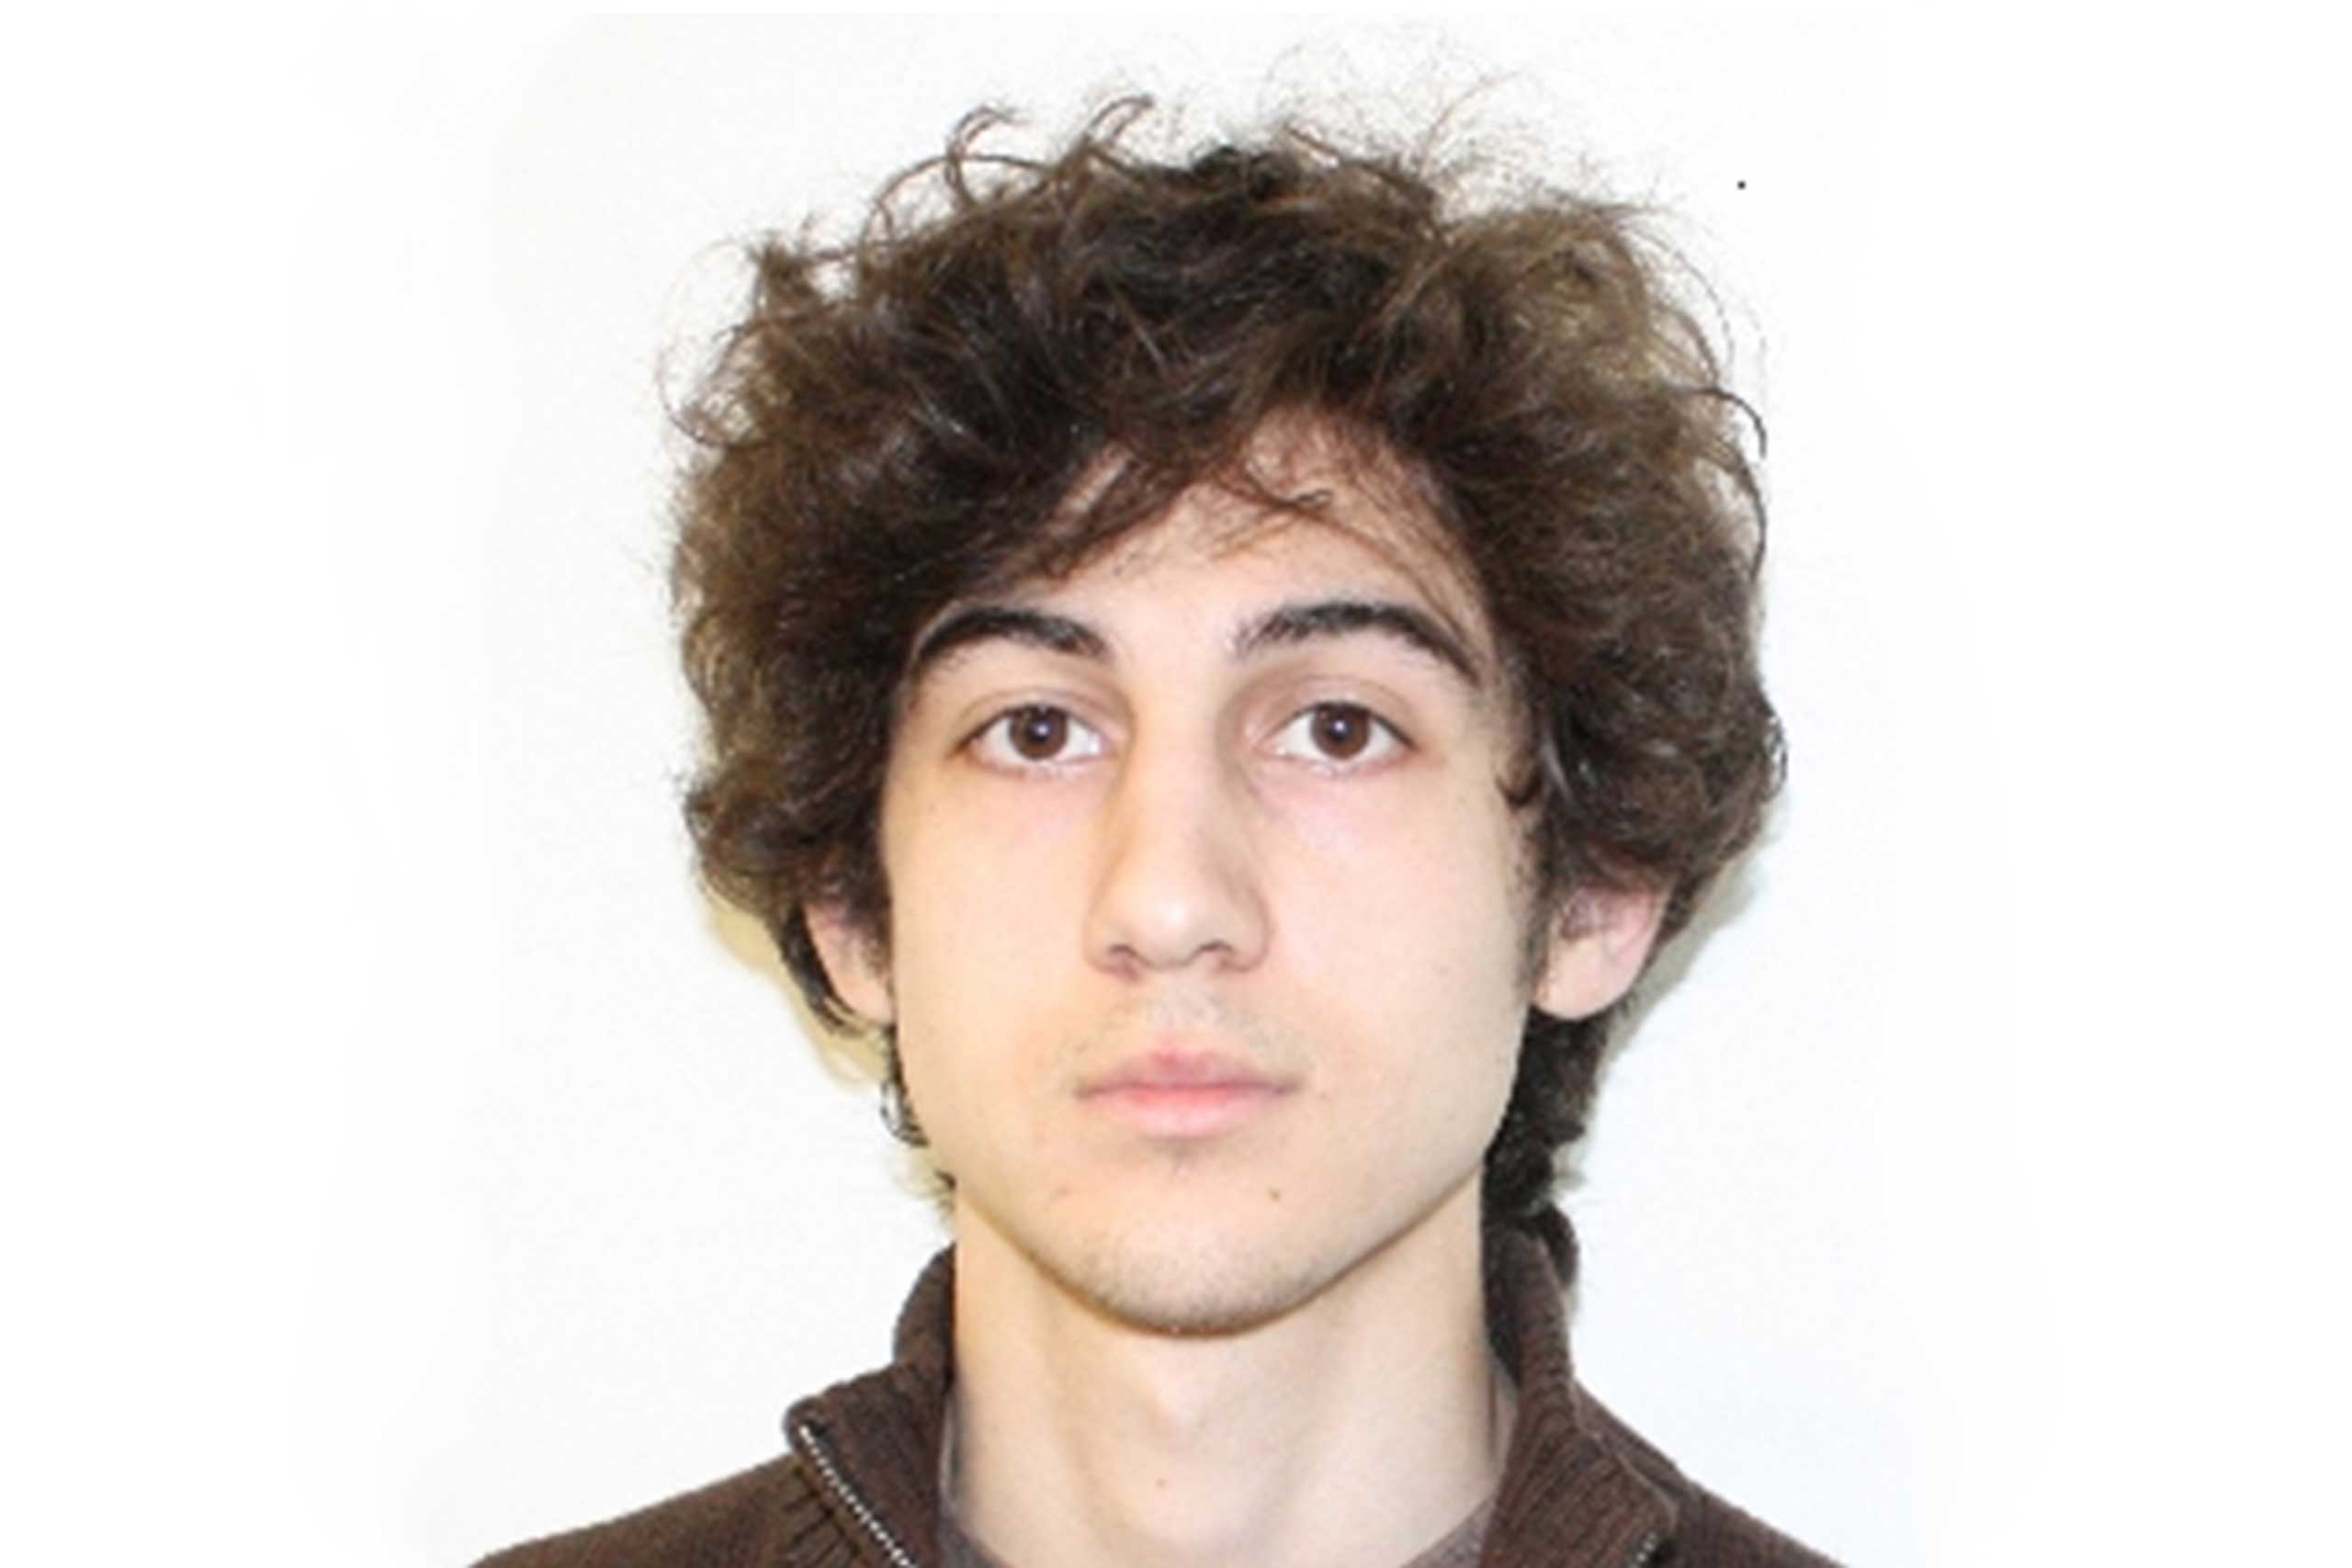 Dzhokhar Tsarnaev, a suspect in the Boston Marathon bombing, photo released on April 19, 2013. (FBI/Getty Images)